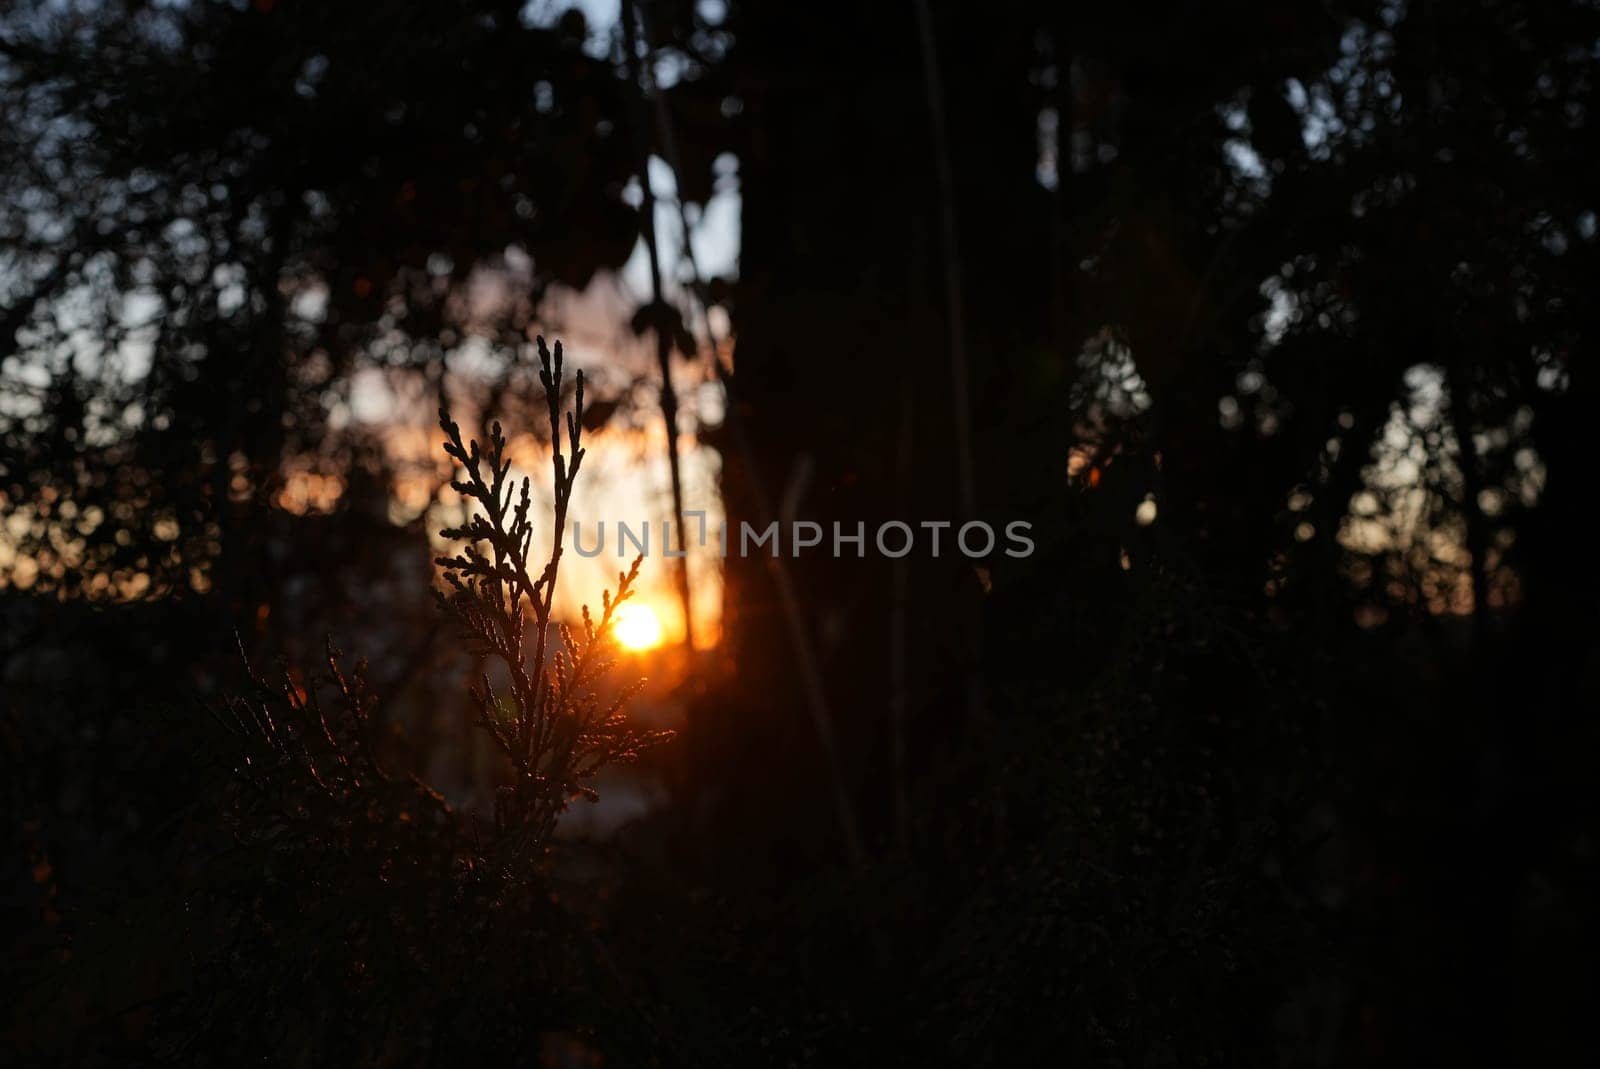 Orange sunset beaming through tree branches. High quality photo